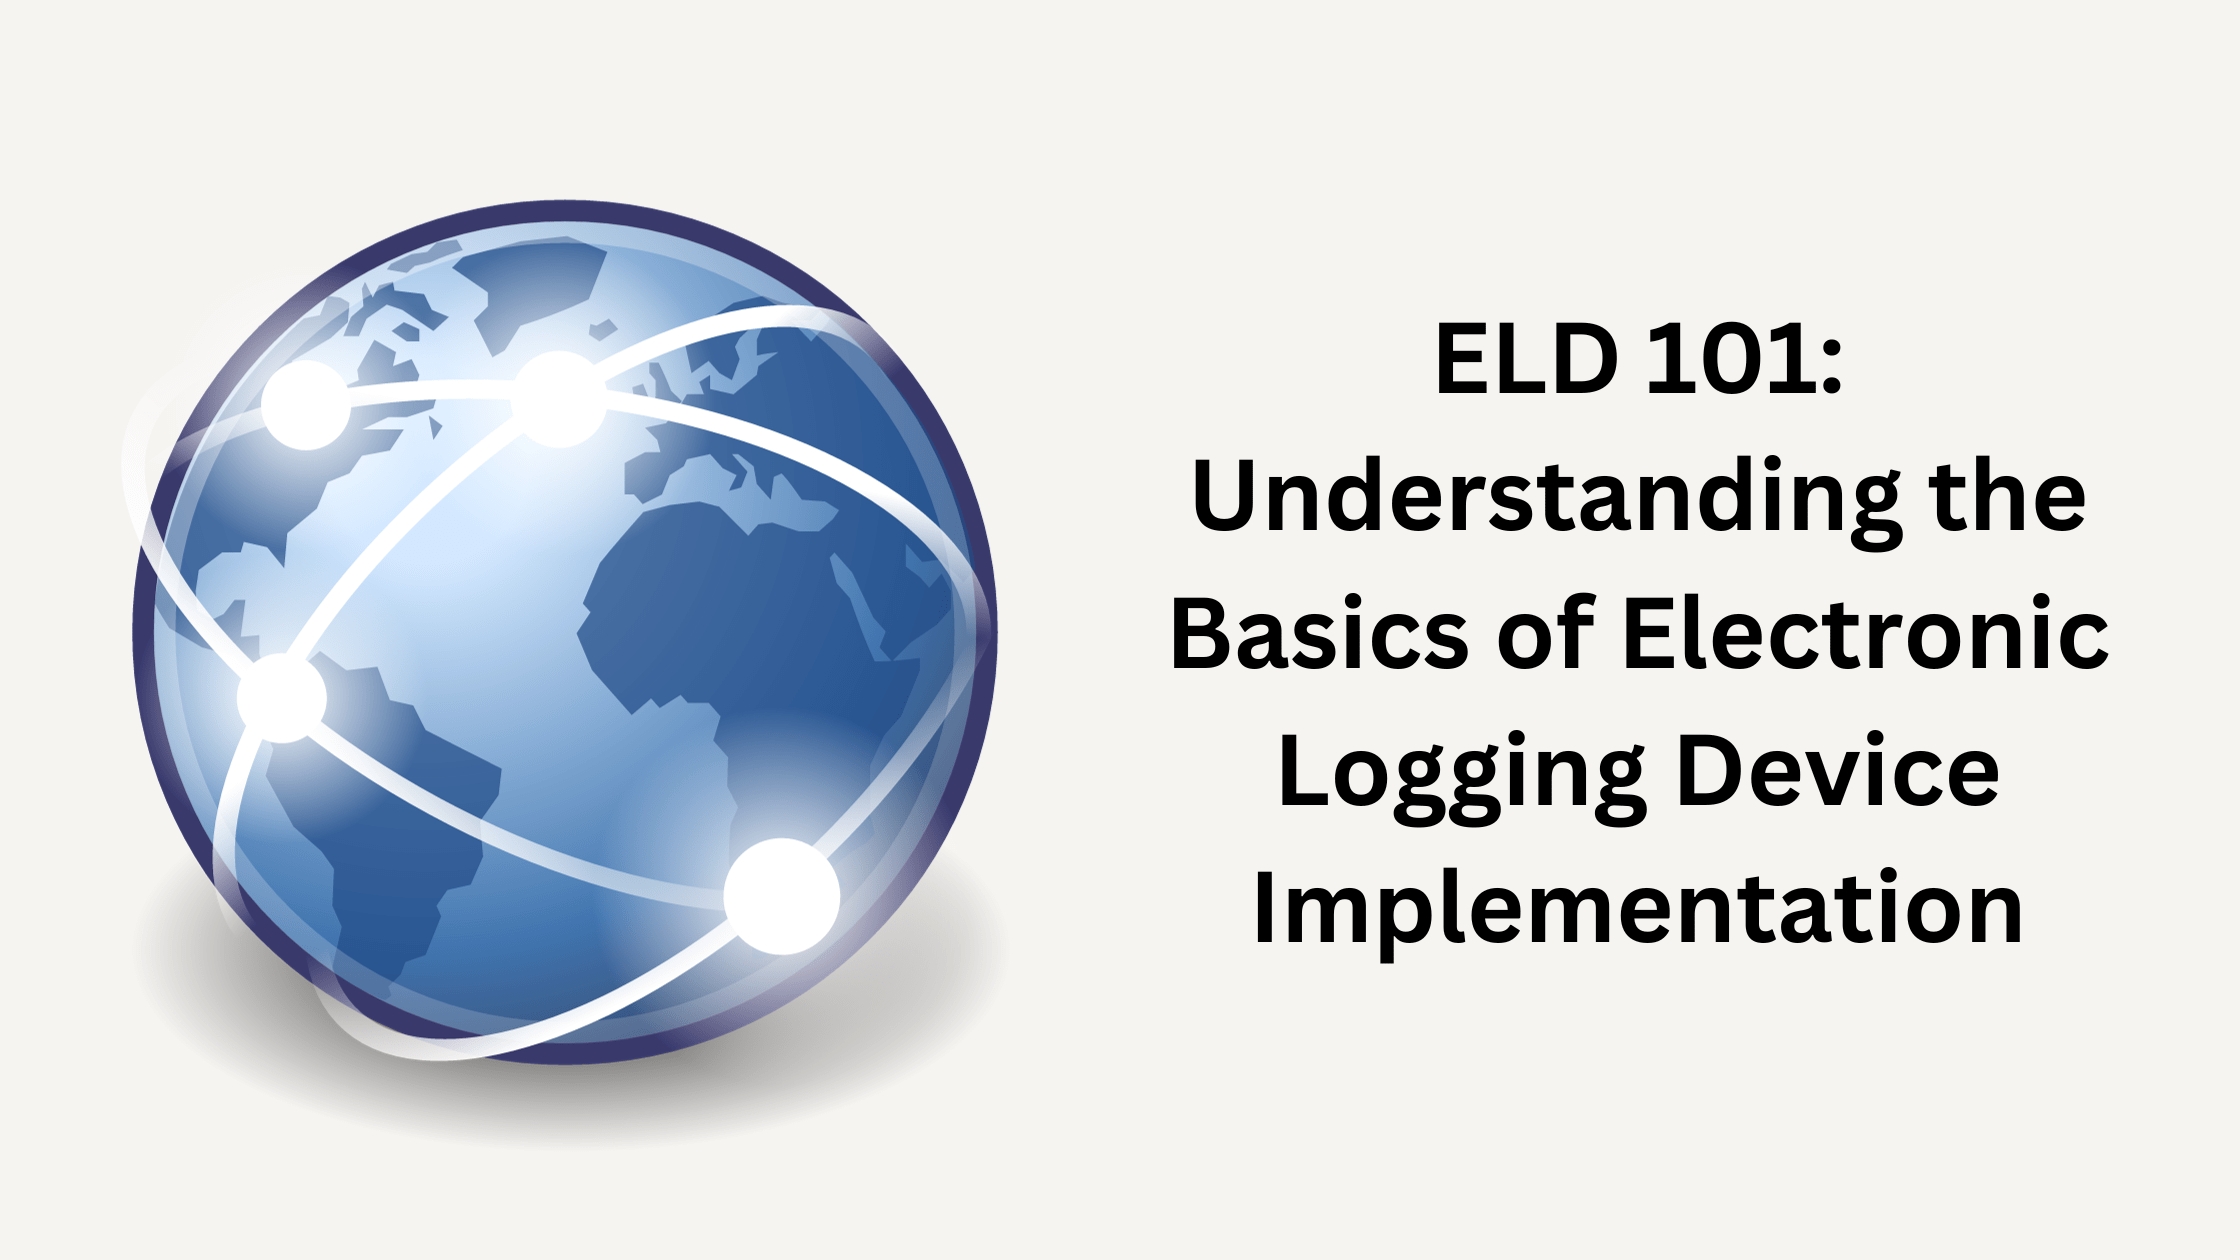 ELD 101: Understanding the Basics of Electronic Logging Device Implementation